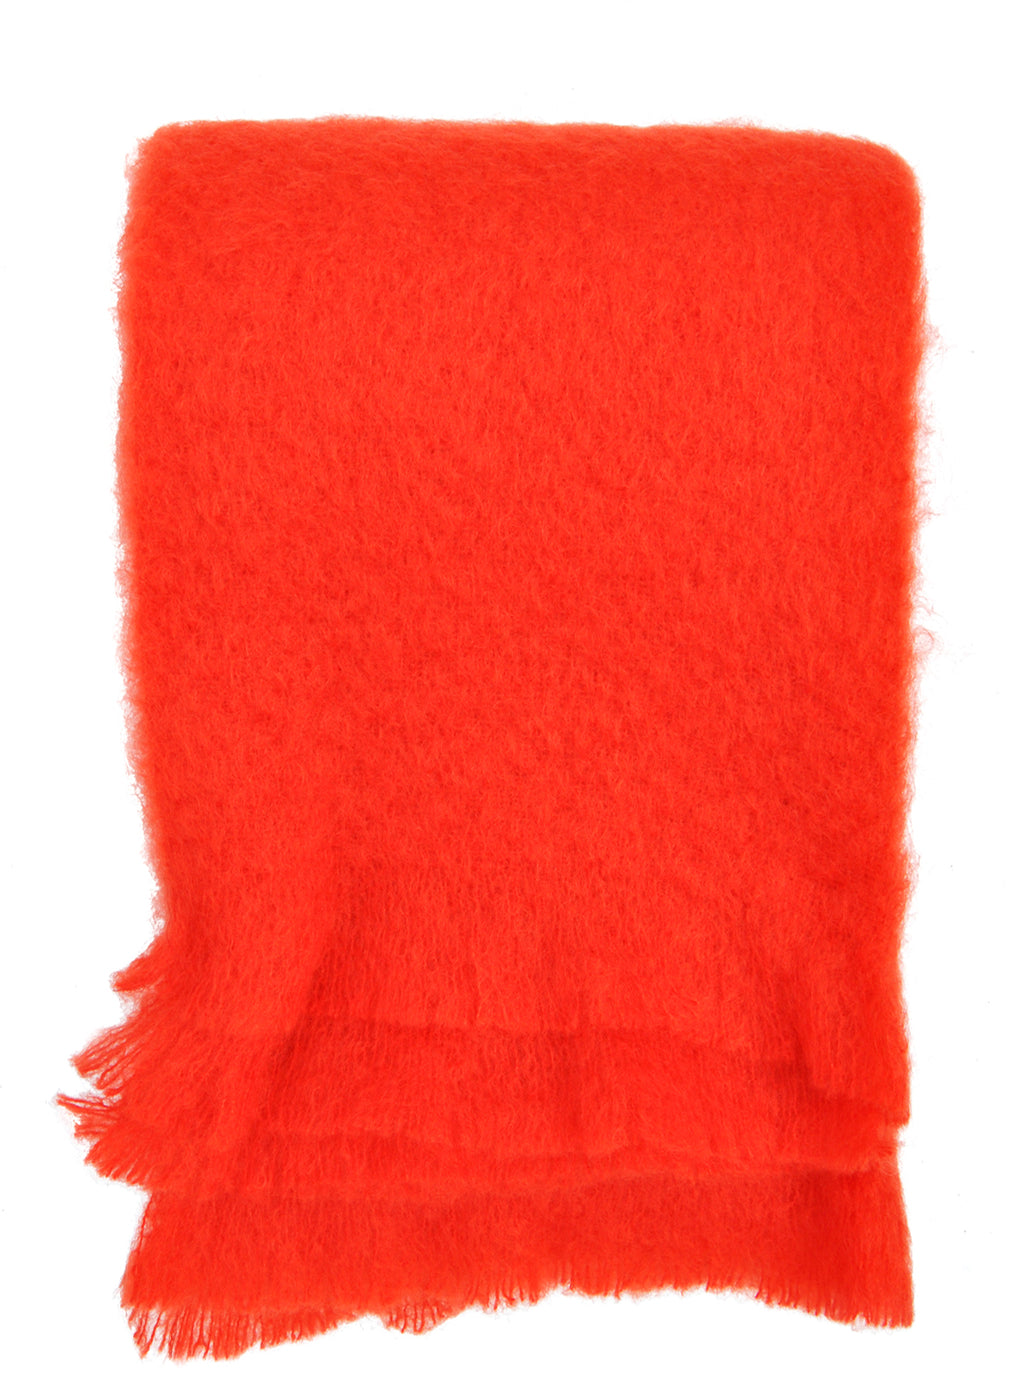 Poppy: Fluffy mohair blanket with soft fringe trim in vibrant shade of red-orange